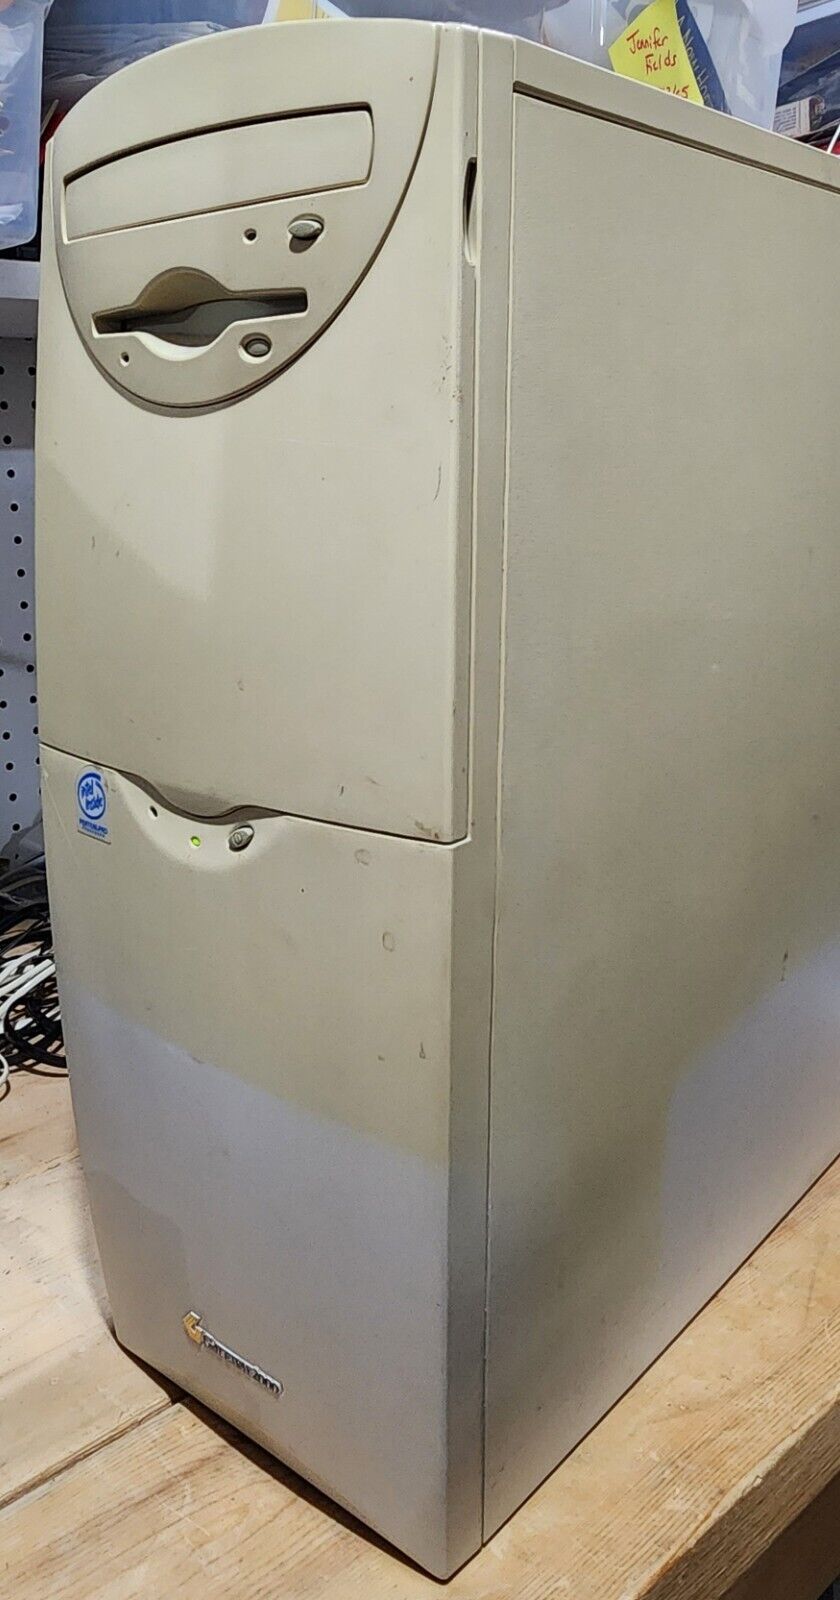 Rare Vintage G6-200 Gateway 2000 Pentium Pro  Computer with WIN 98  PLEASE READ